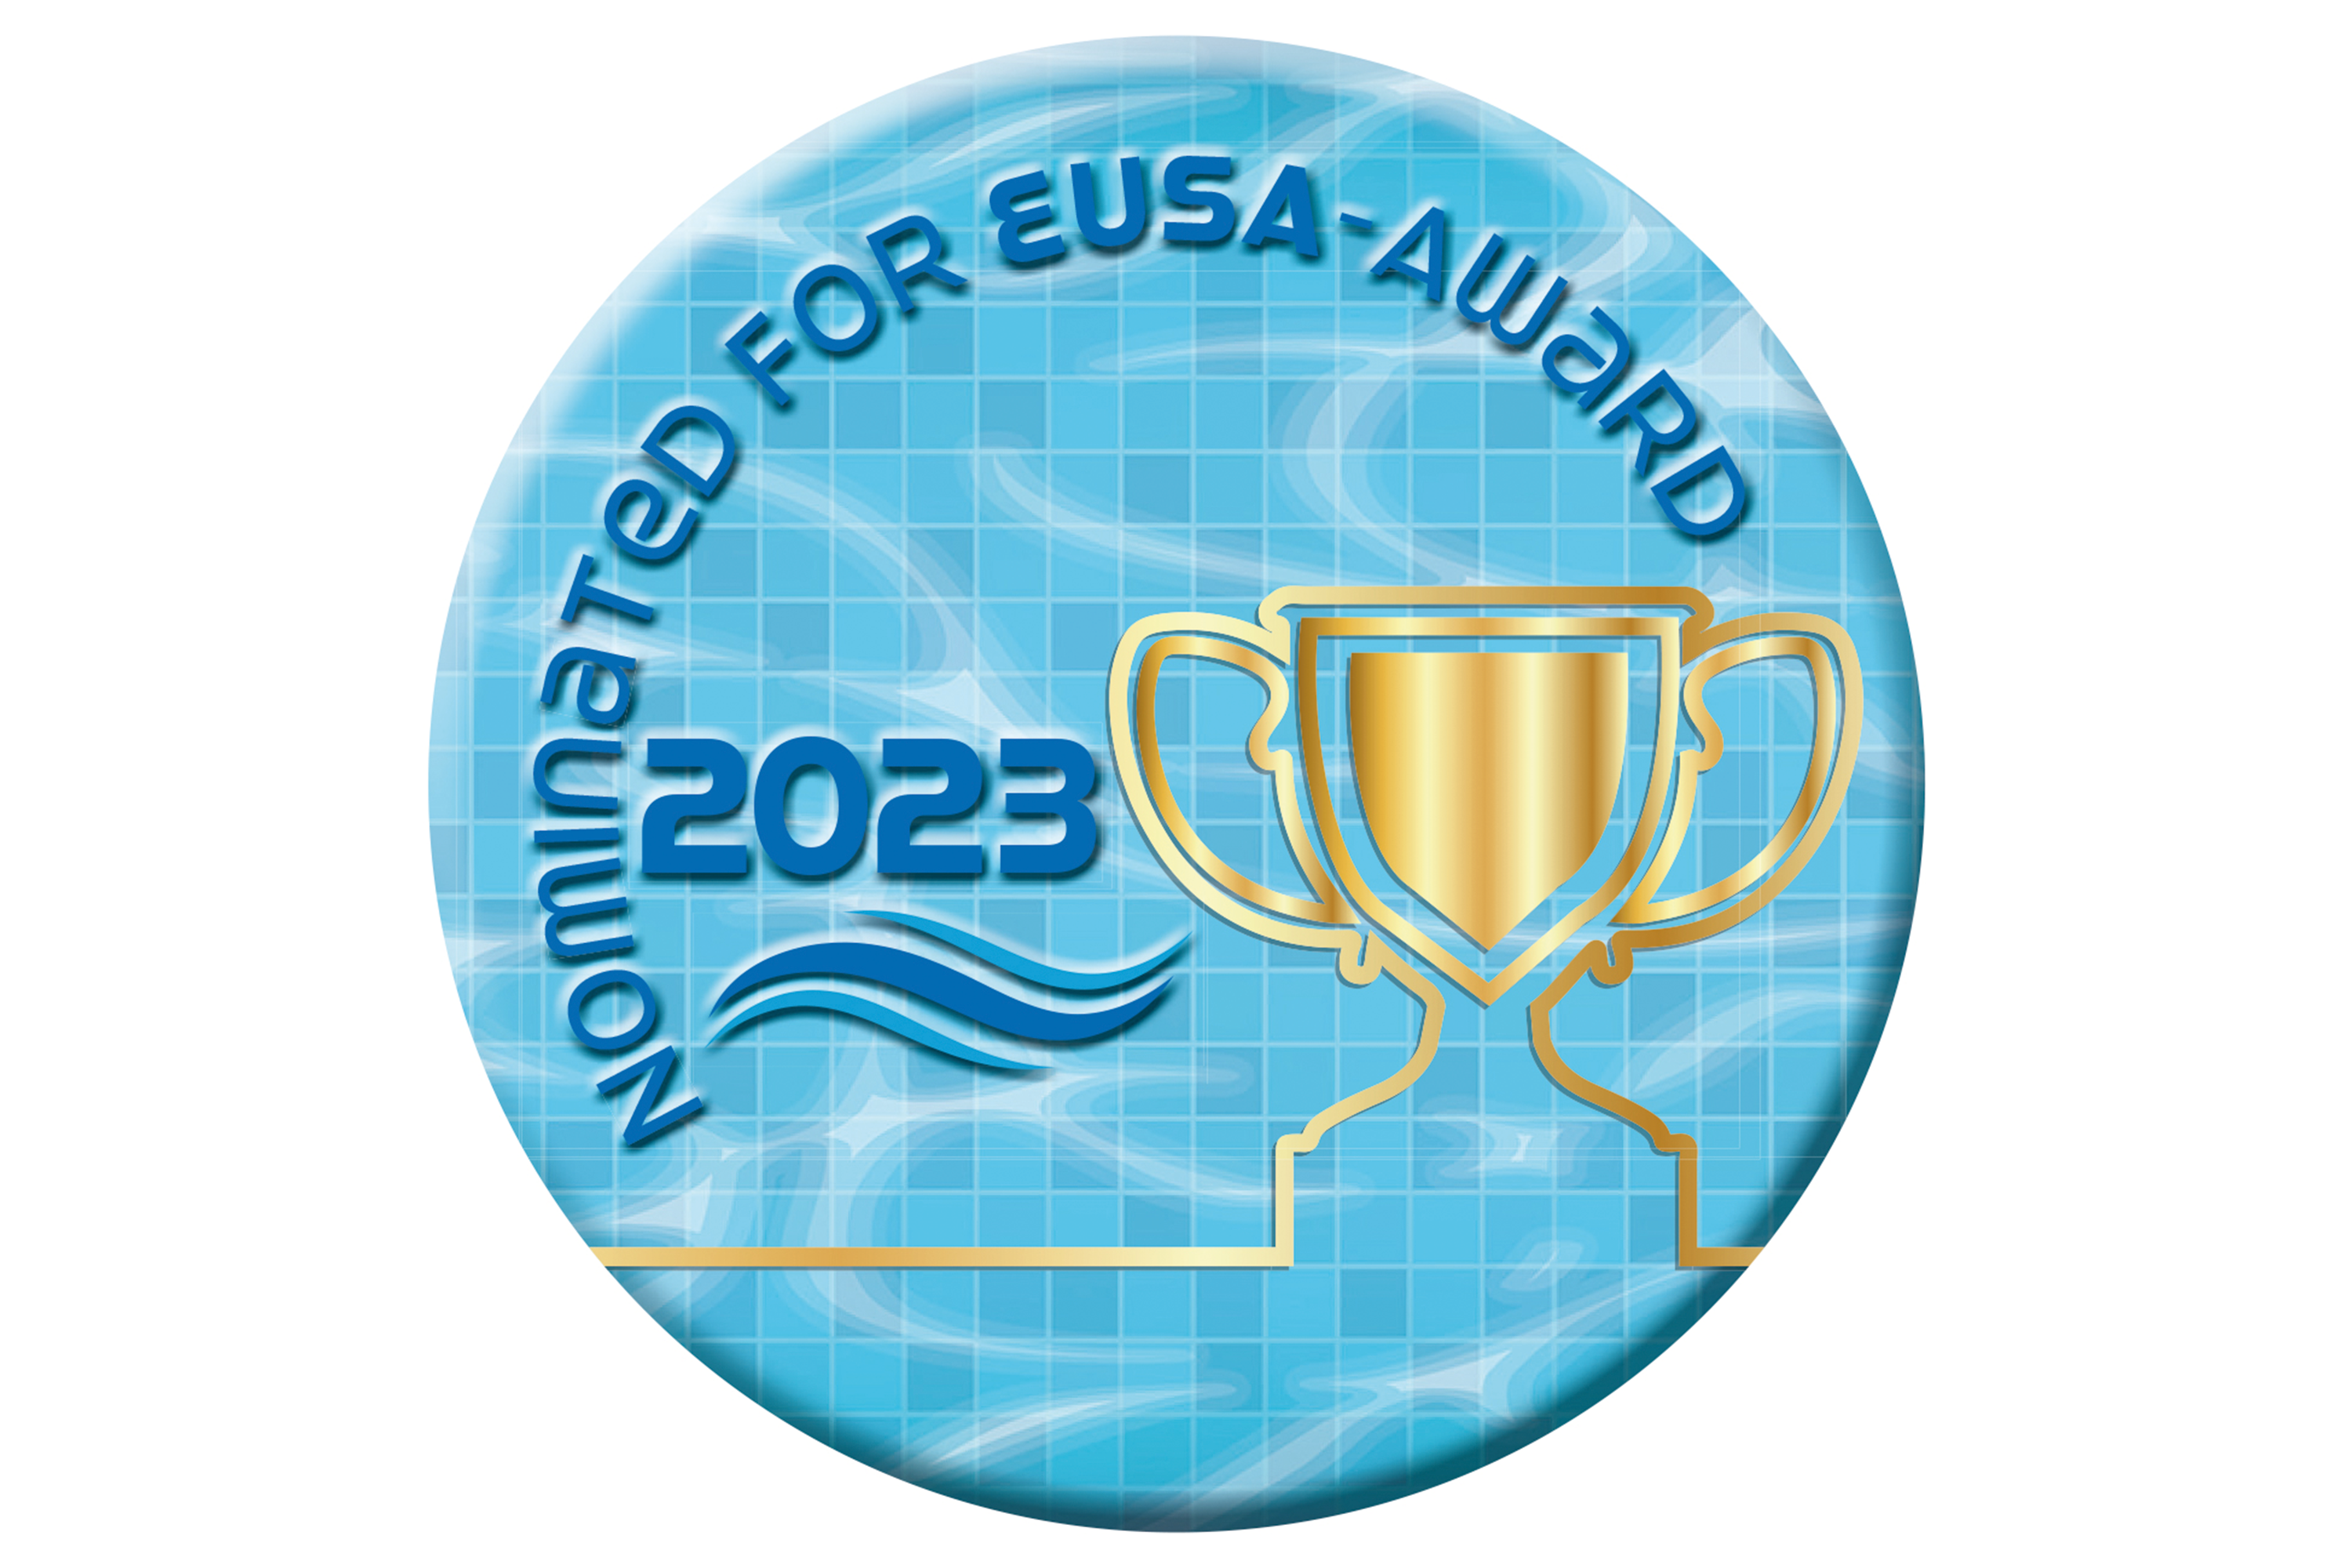 BAC pool systems EUSA-AWARD 2023